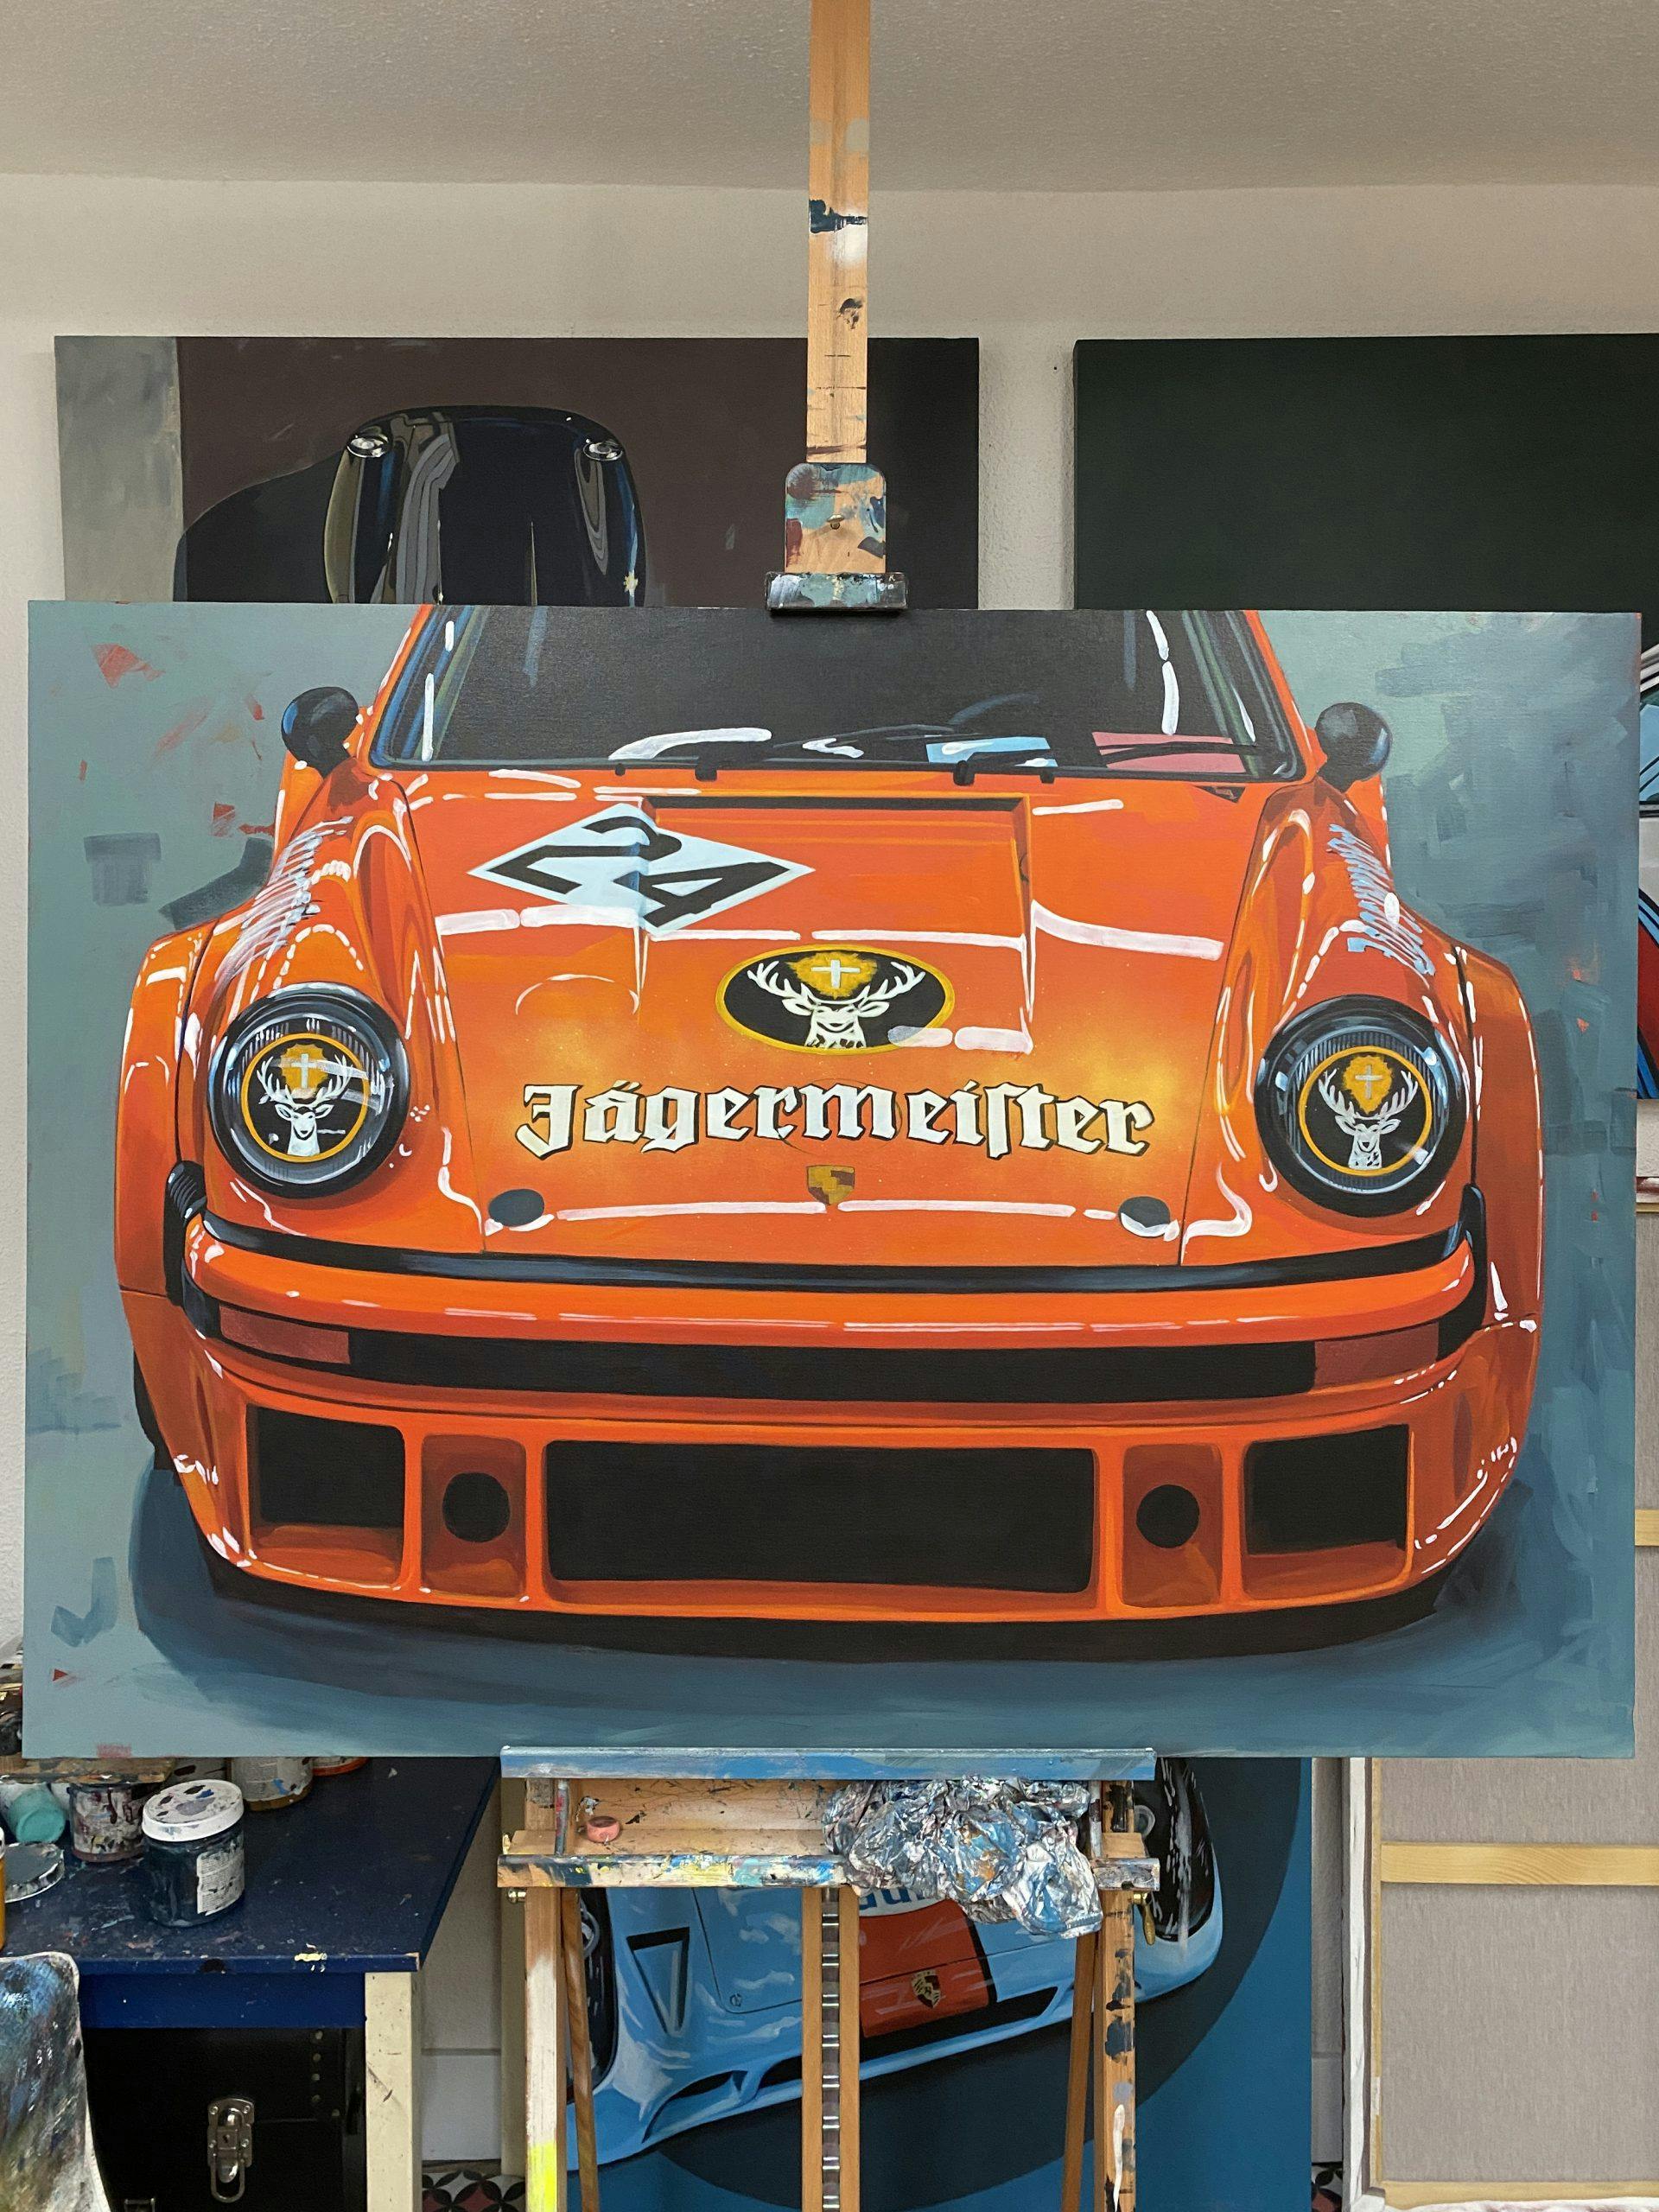 motorsport porsche graphic art painting in jagermeister livery